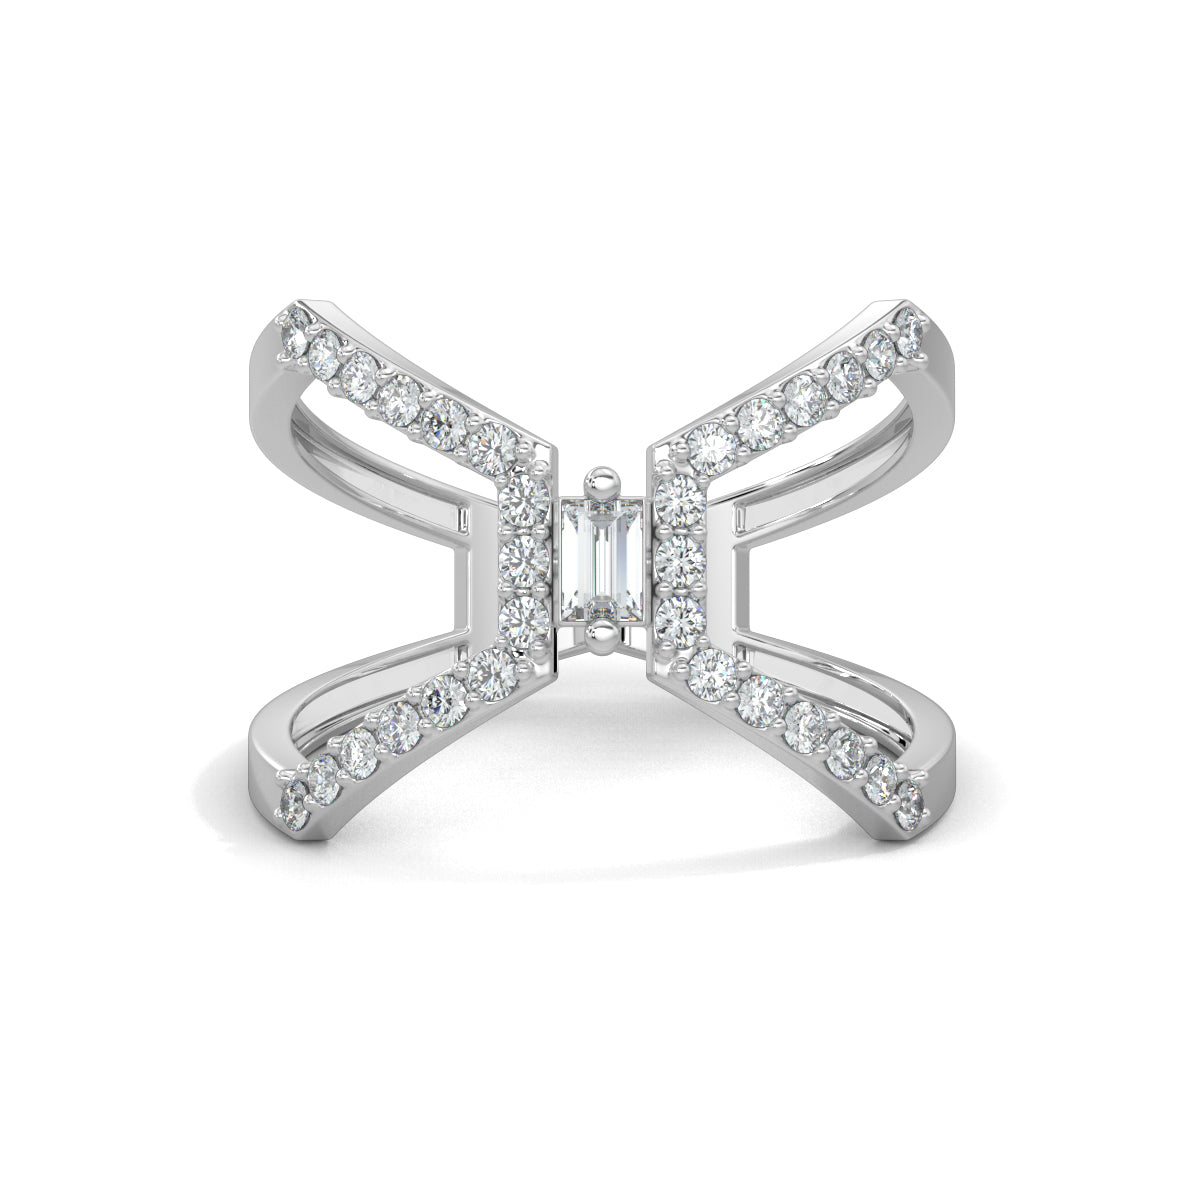 White Gold, Diamond Ring, Natural diamond ring, Lab-grown diamond ring, everyday ring, split shank design, butterfly ring, baguette diamond, round diamonds, fashion jewelry, exquisite elegance.